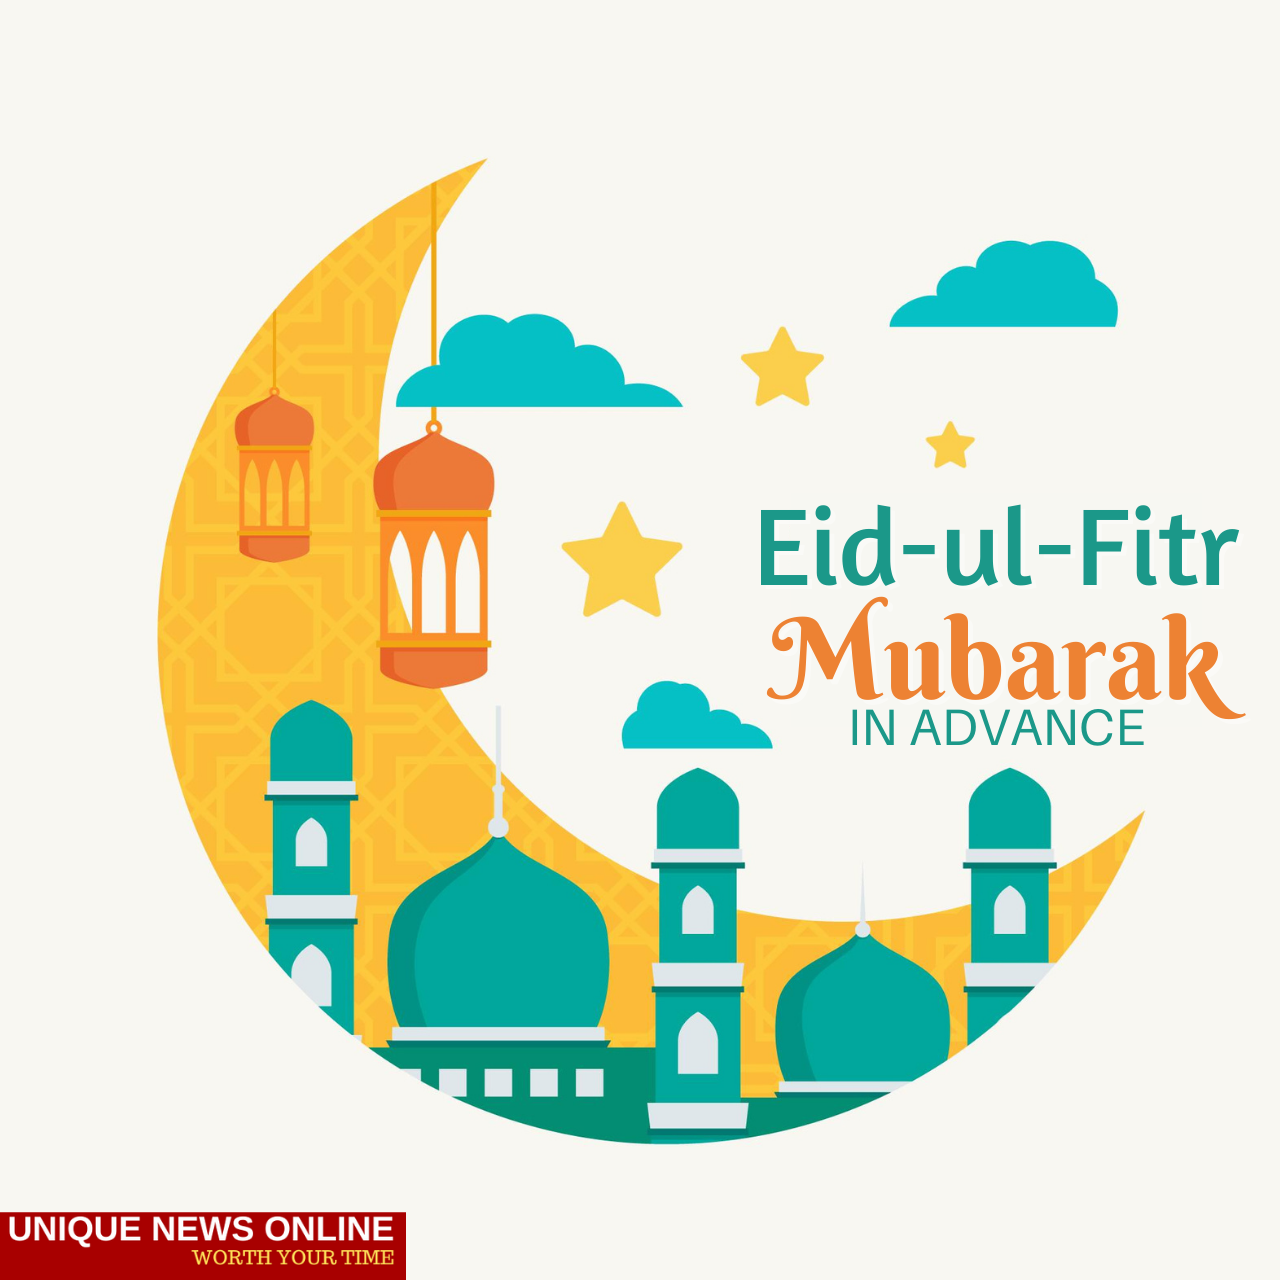 Eid-ul-Fitr Mubarak 2021 wishes in Advance, Eid al-Fitr and Chand Raat Mubarak Greetings for Love, Girlfriend, Husband, Wife, friend, sister, and Colleagues